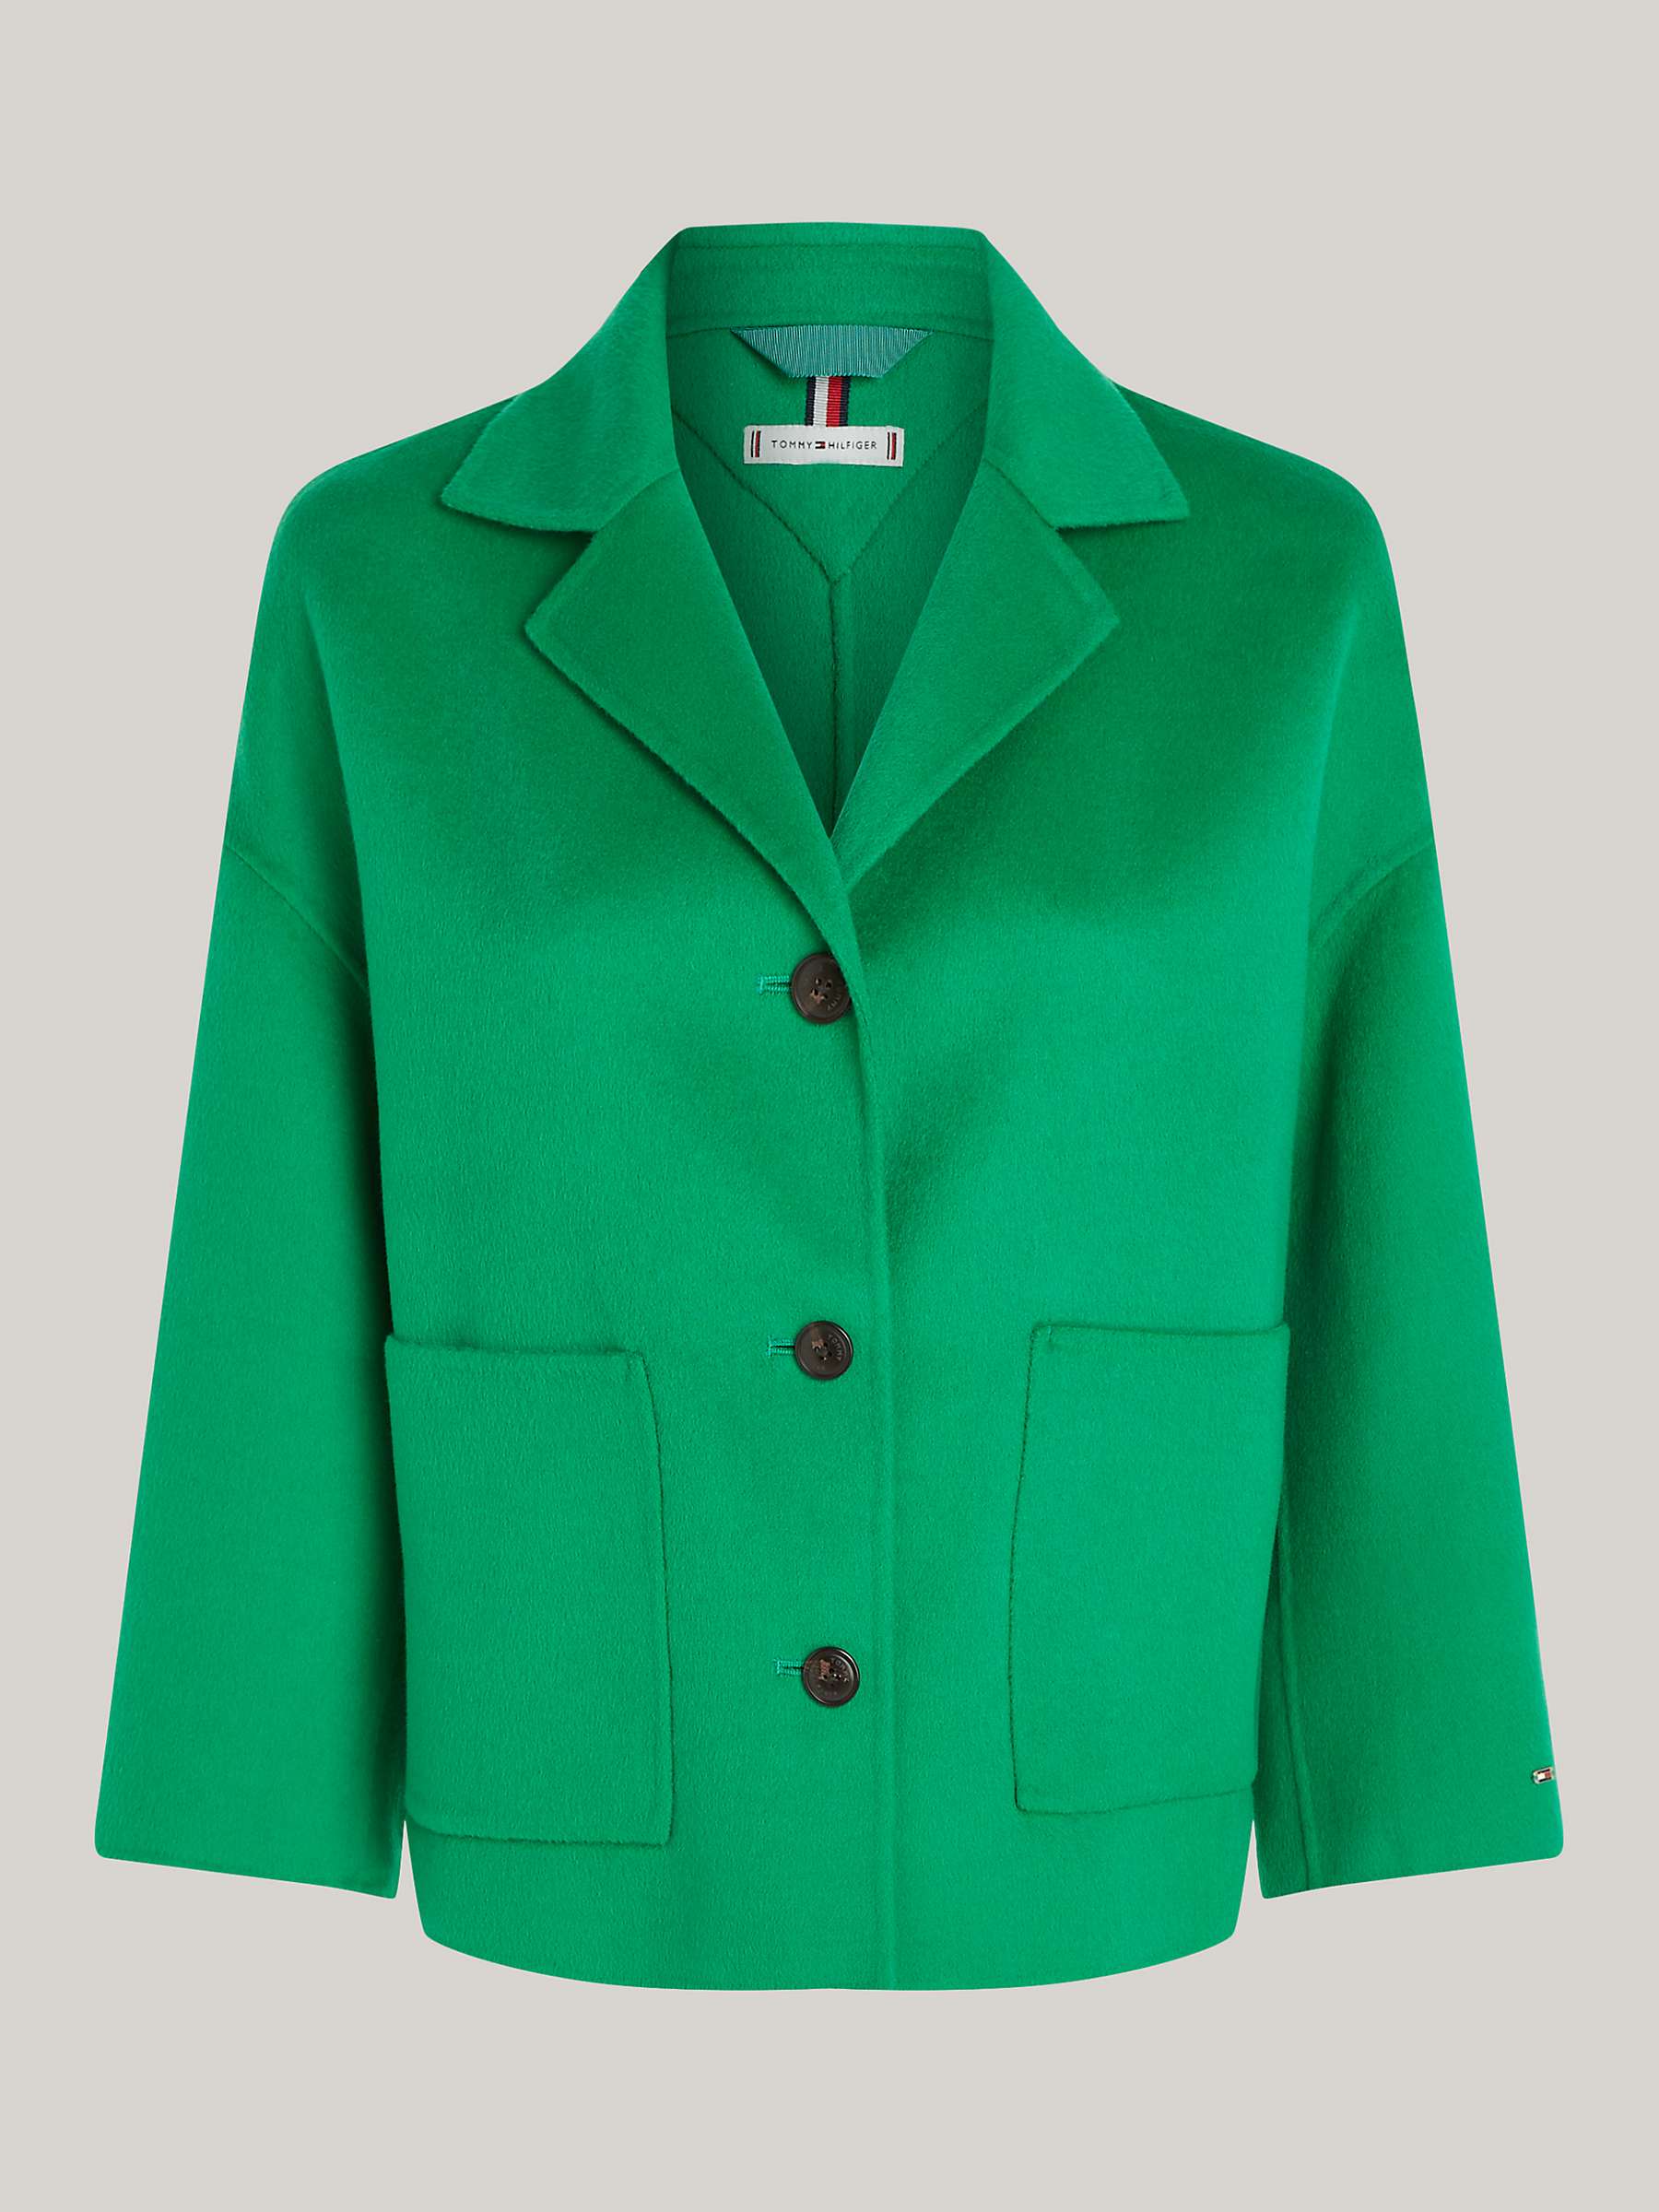 Buy Tommy Hilfiger Wool Blend Jacket, Olympic Green Online at johnlewis.com